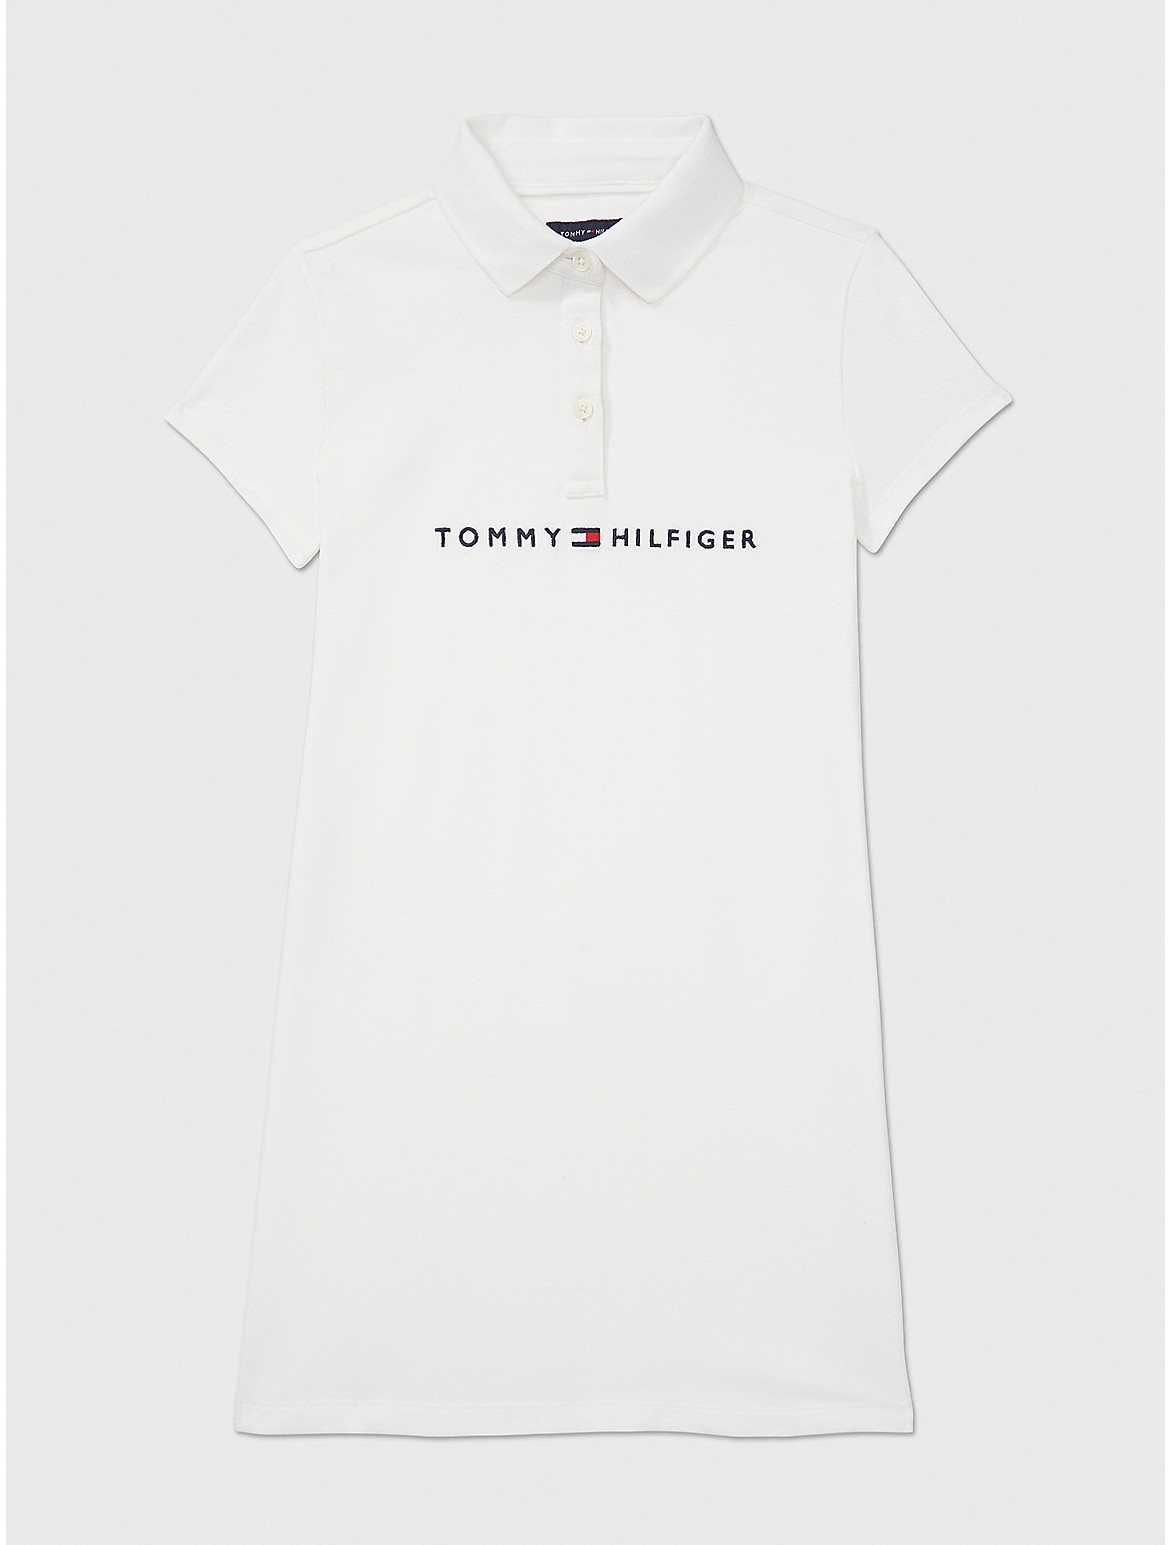 Tommy Hilfiger Girls' Kids' Embroidered Tommy Logo Dress - White - L